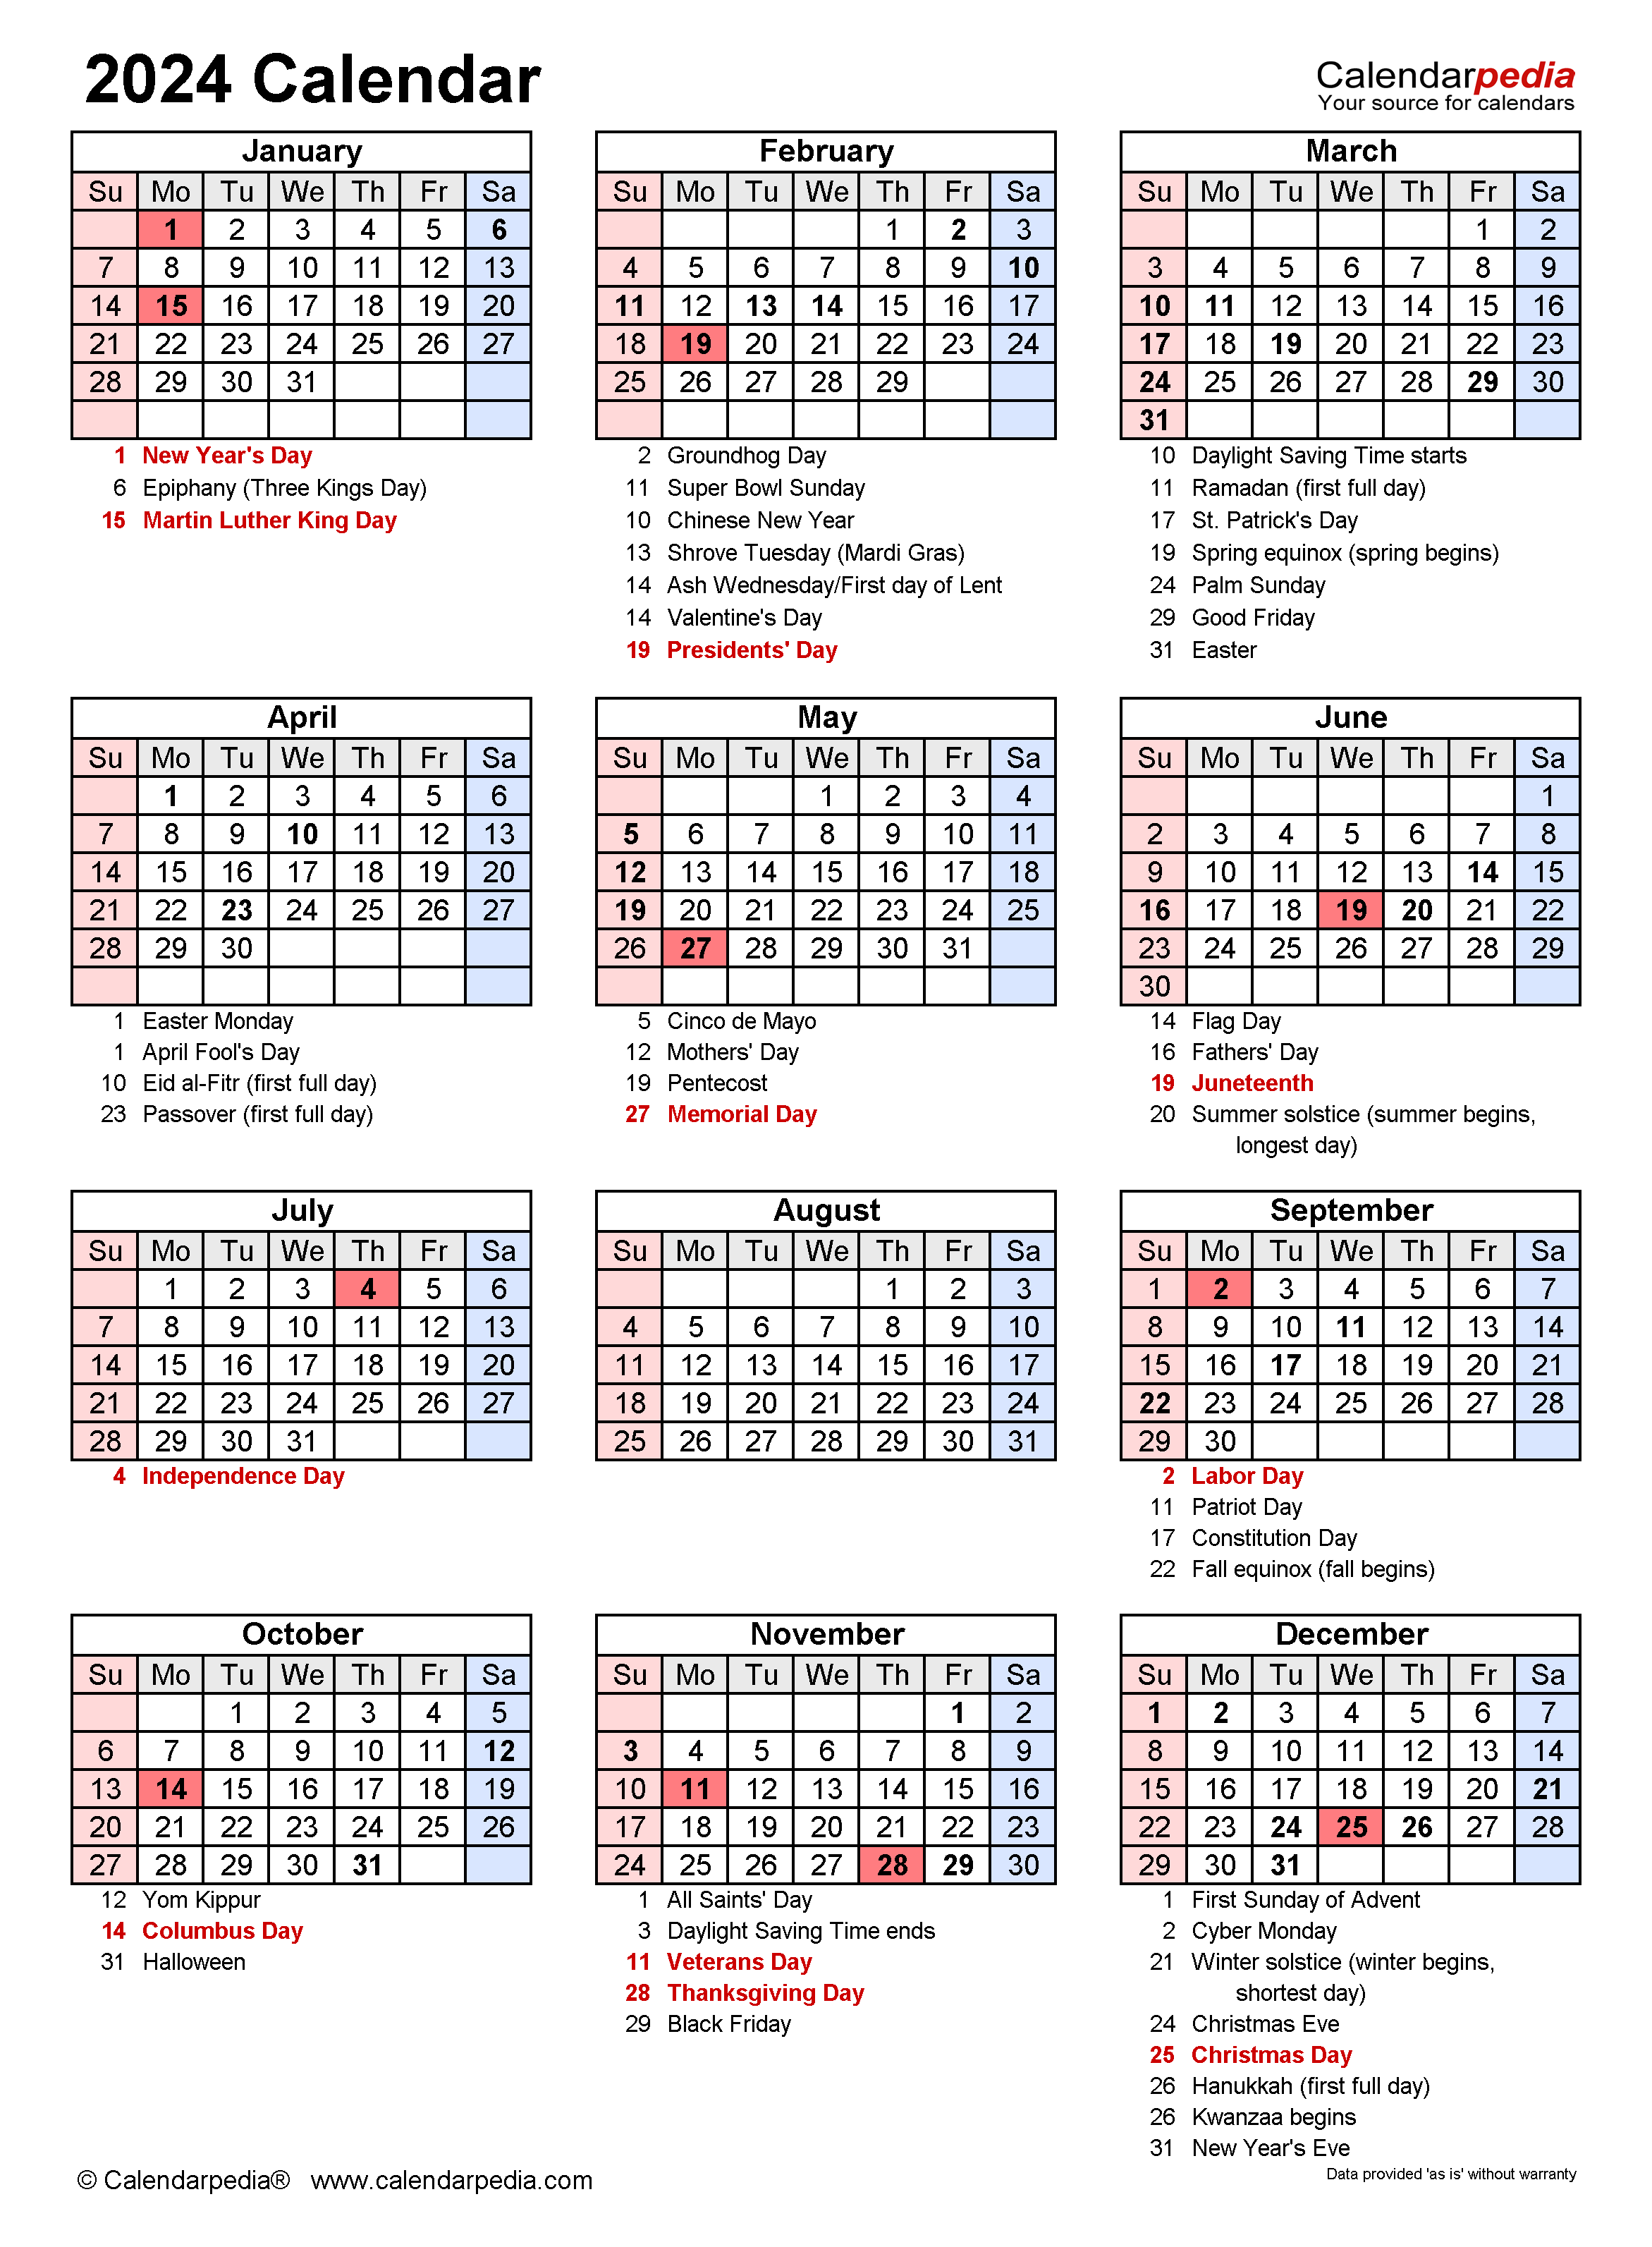 2024 Calendar Free Printable PDF Templates Calendarpedia - Free Printable 2024 Yearly Calendar With Federal Holidays